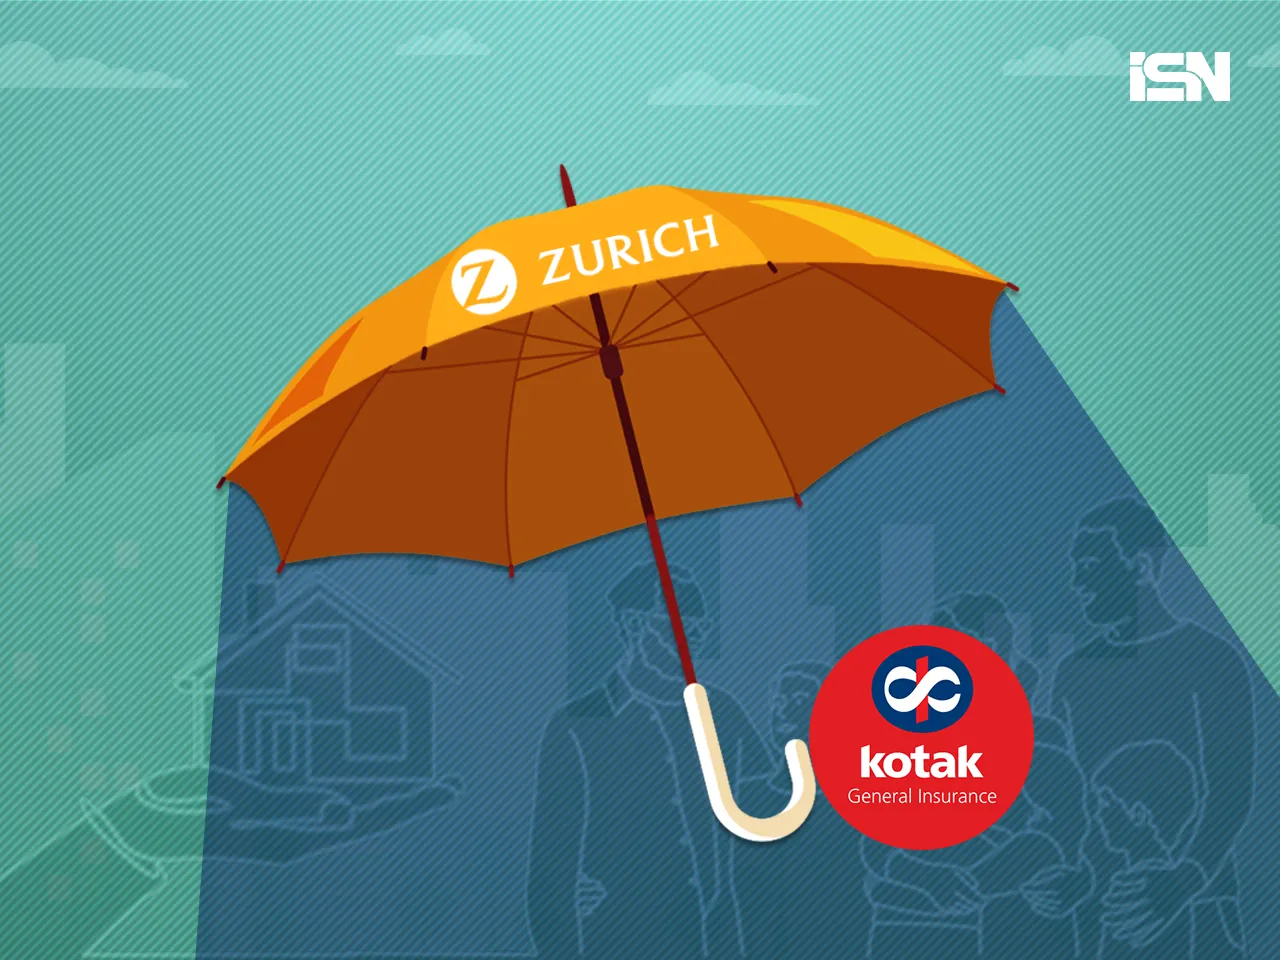 Zurich insurance buying 51 stake of kotak general insurance 5 (1)